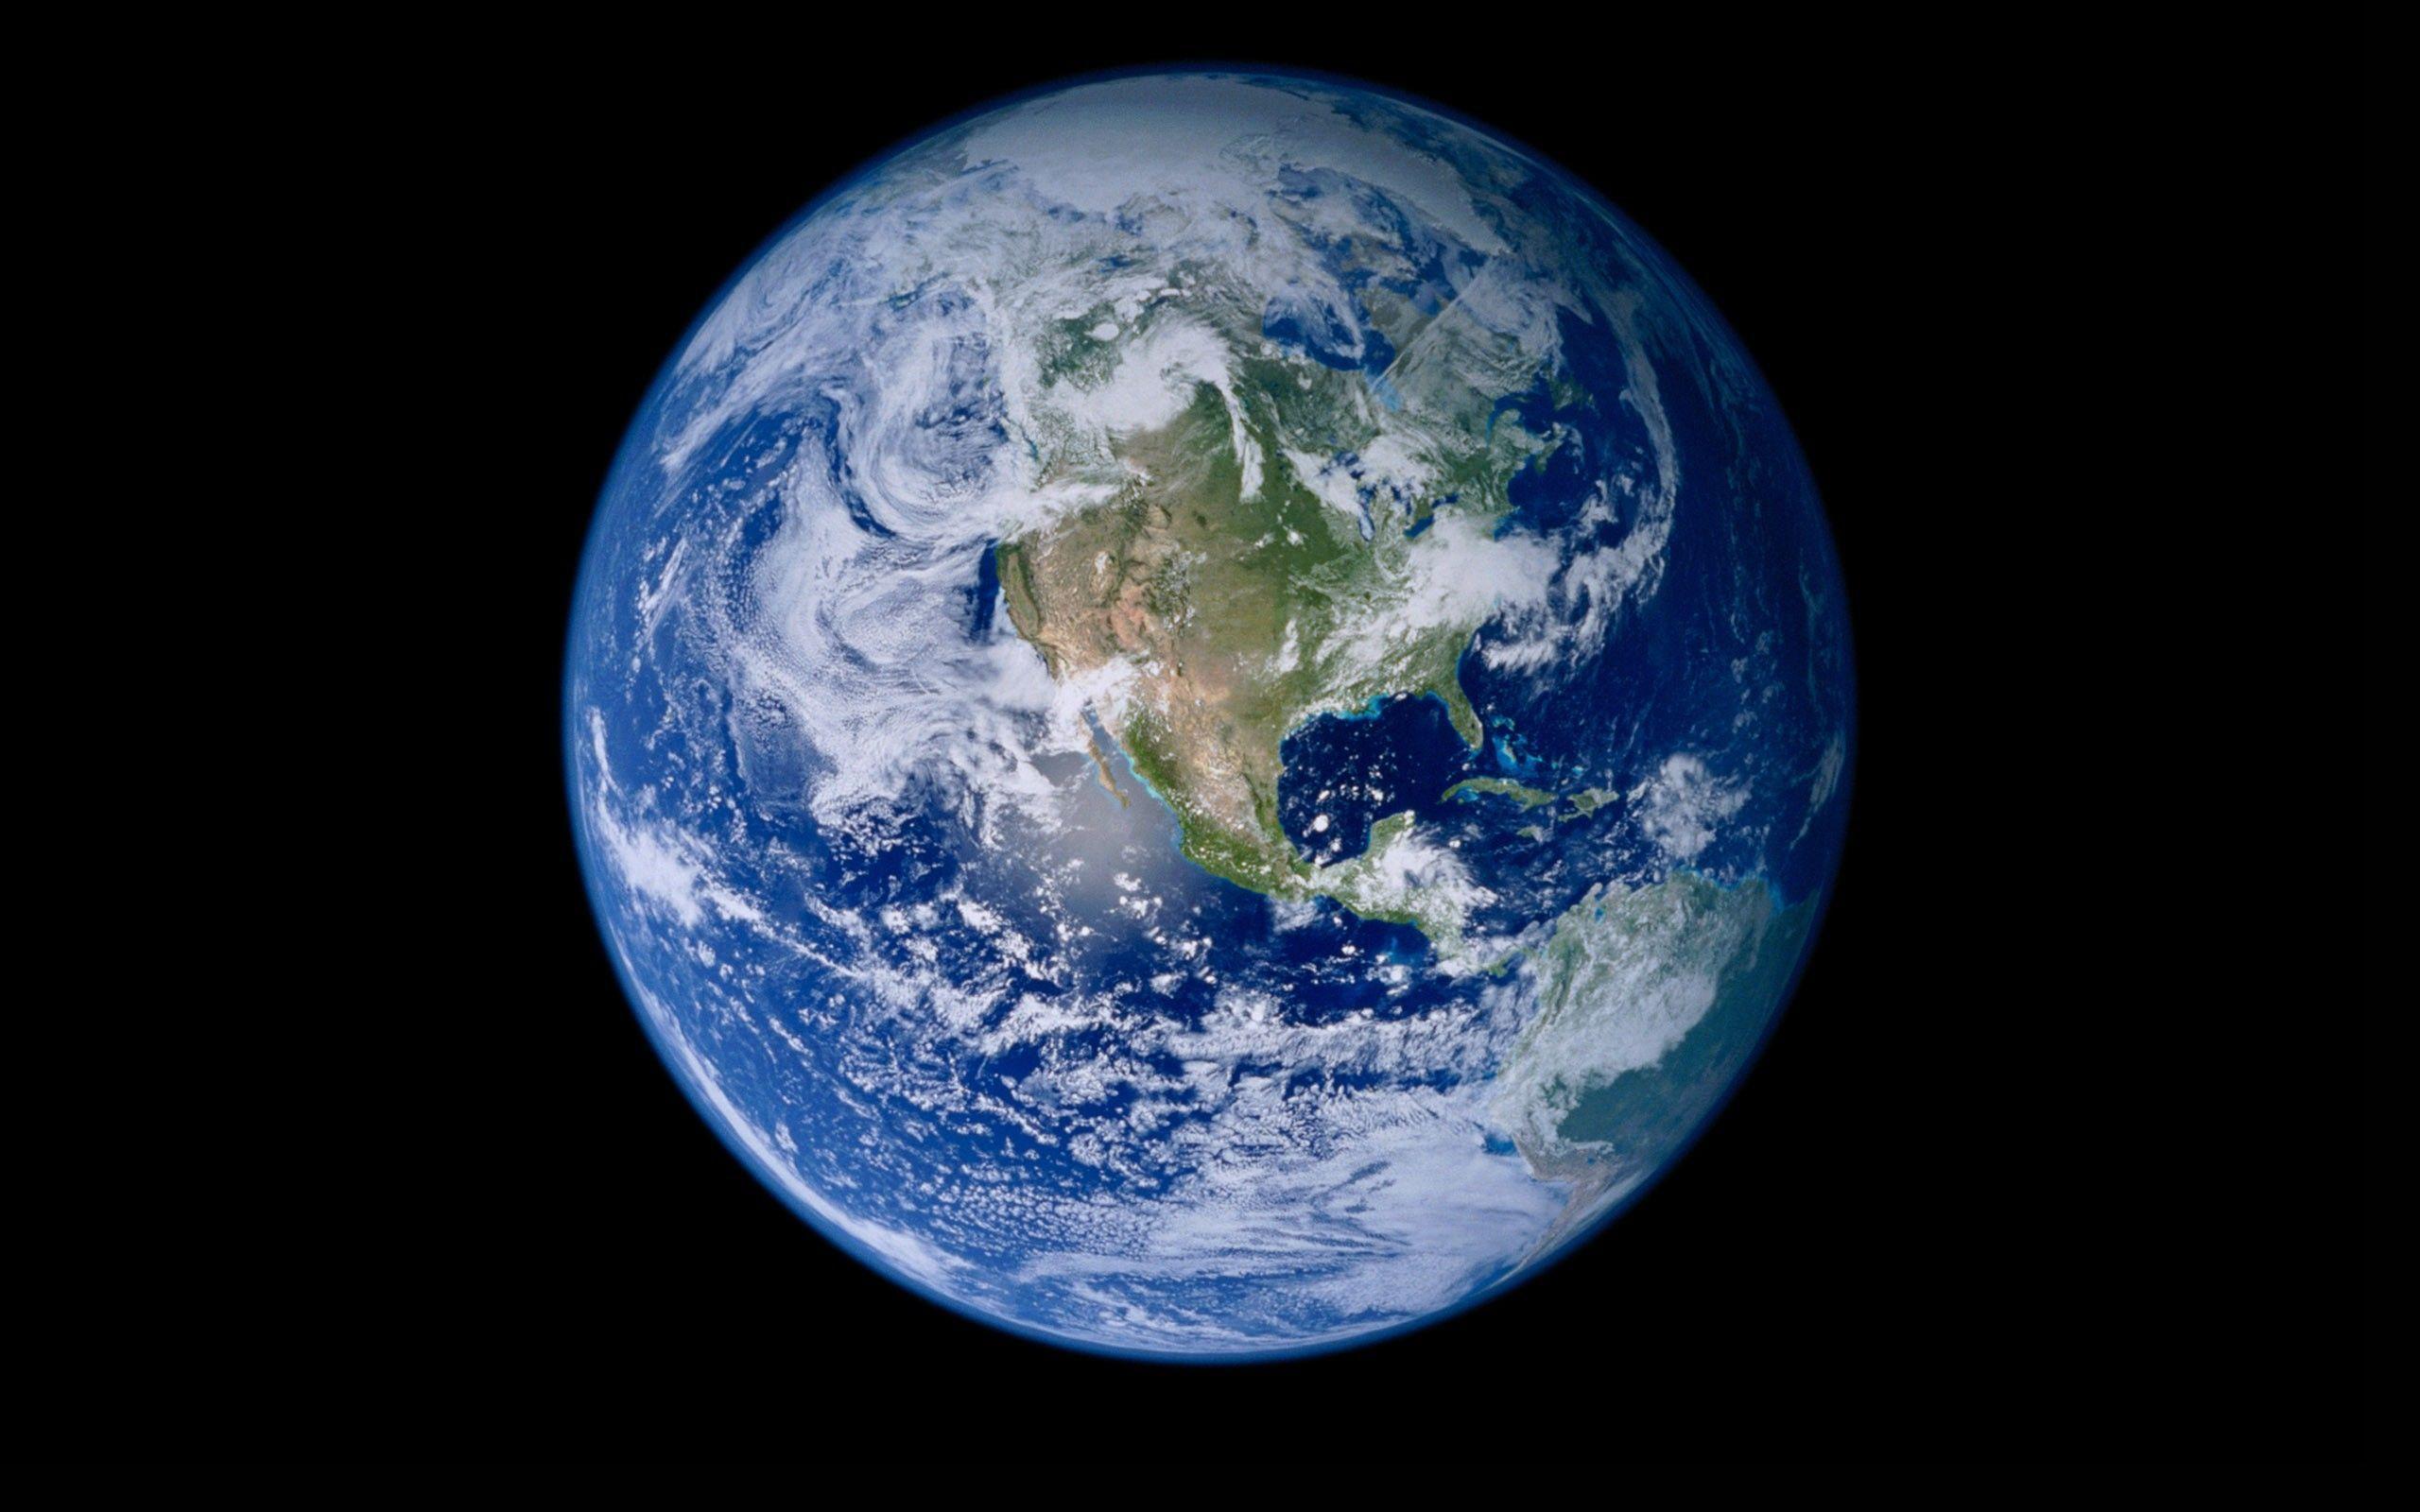 Earth From Space Wallpaper Nasa Image 6 HD Wallpaper. lzamgs